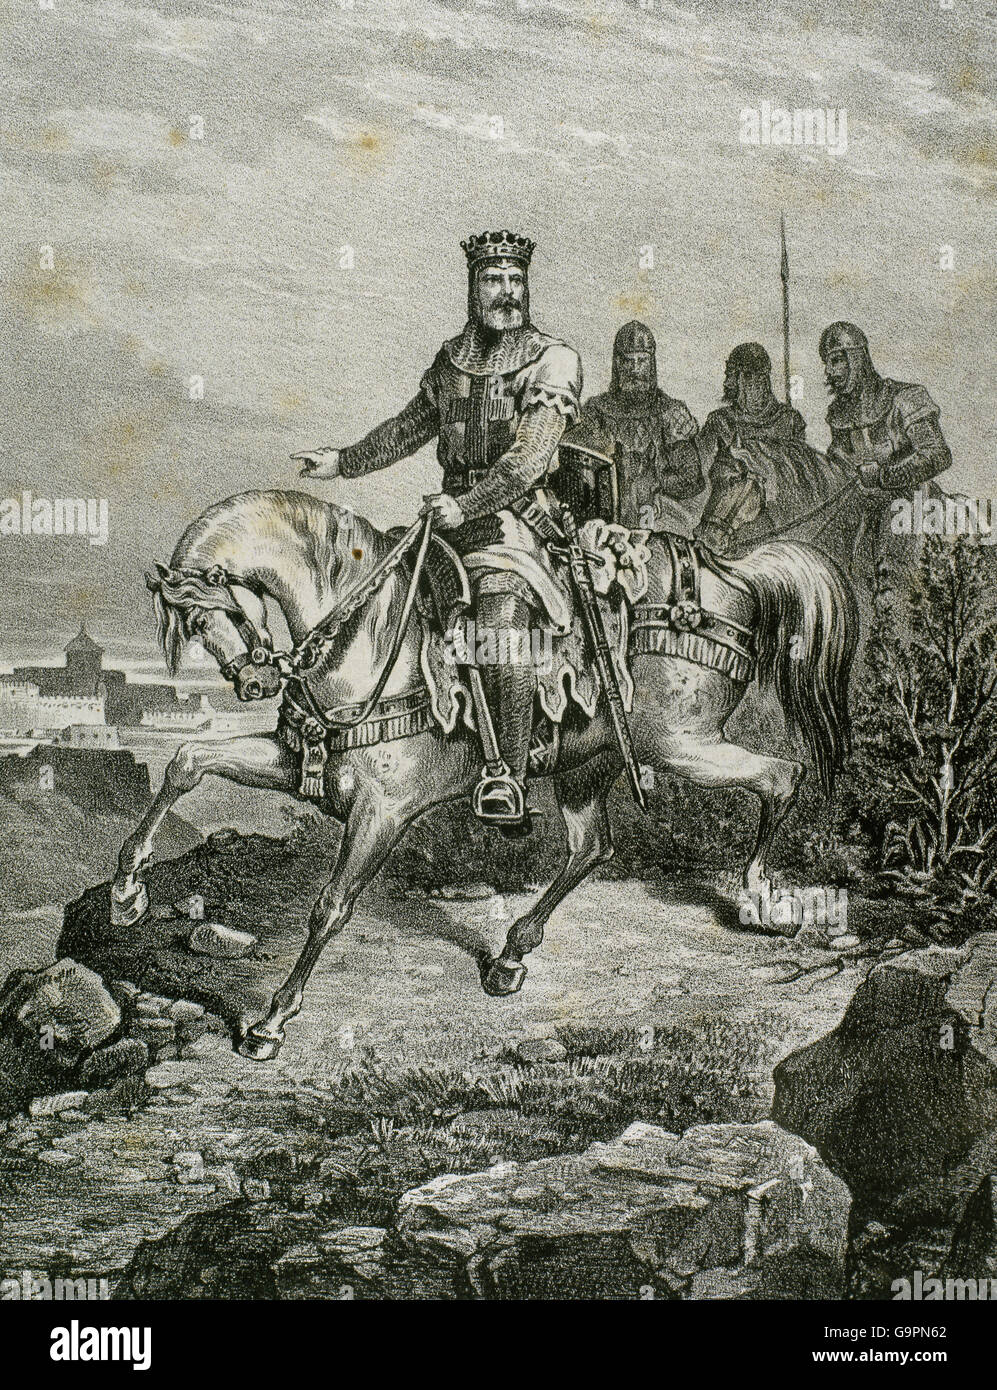 Alfonso VIII (1155-1214). König von Kastilien. Namens el de Las Navas oder die Noble. Gravur in Spanien Illustrated History, 19. Jahrhundert. Stockfoto